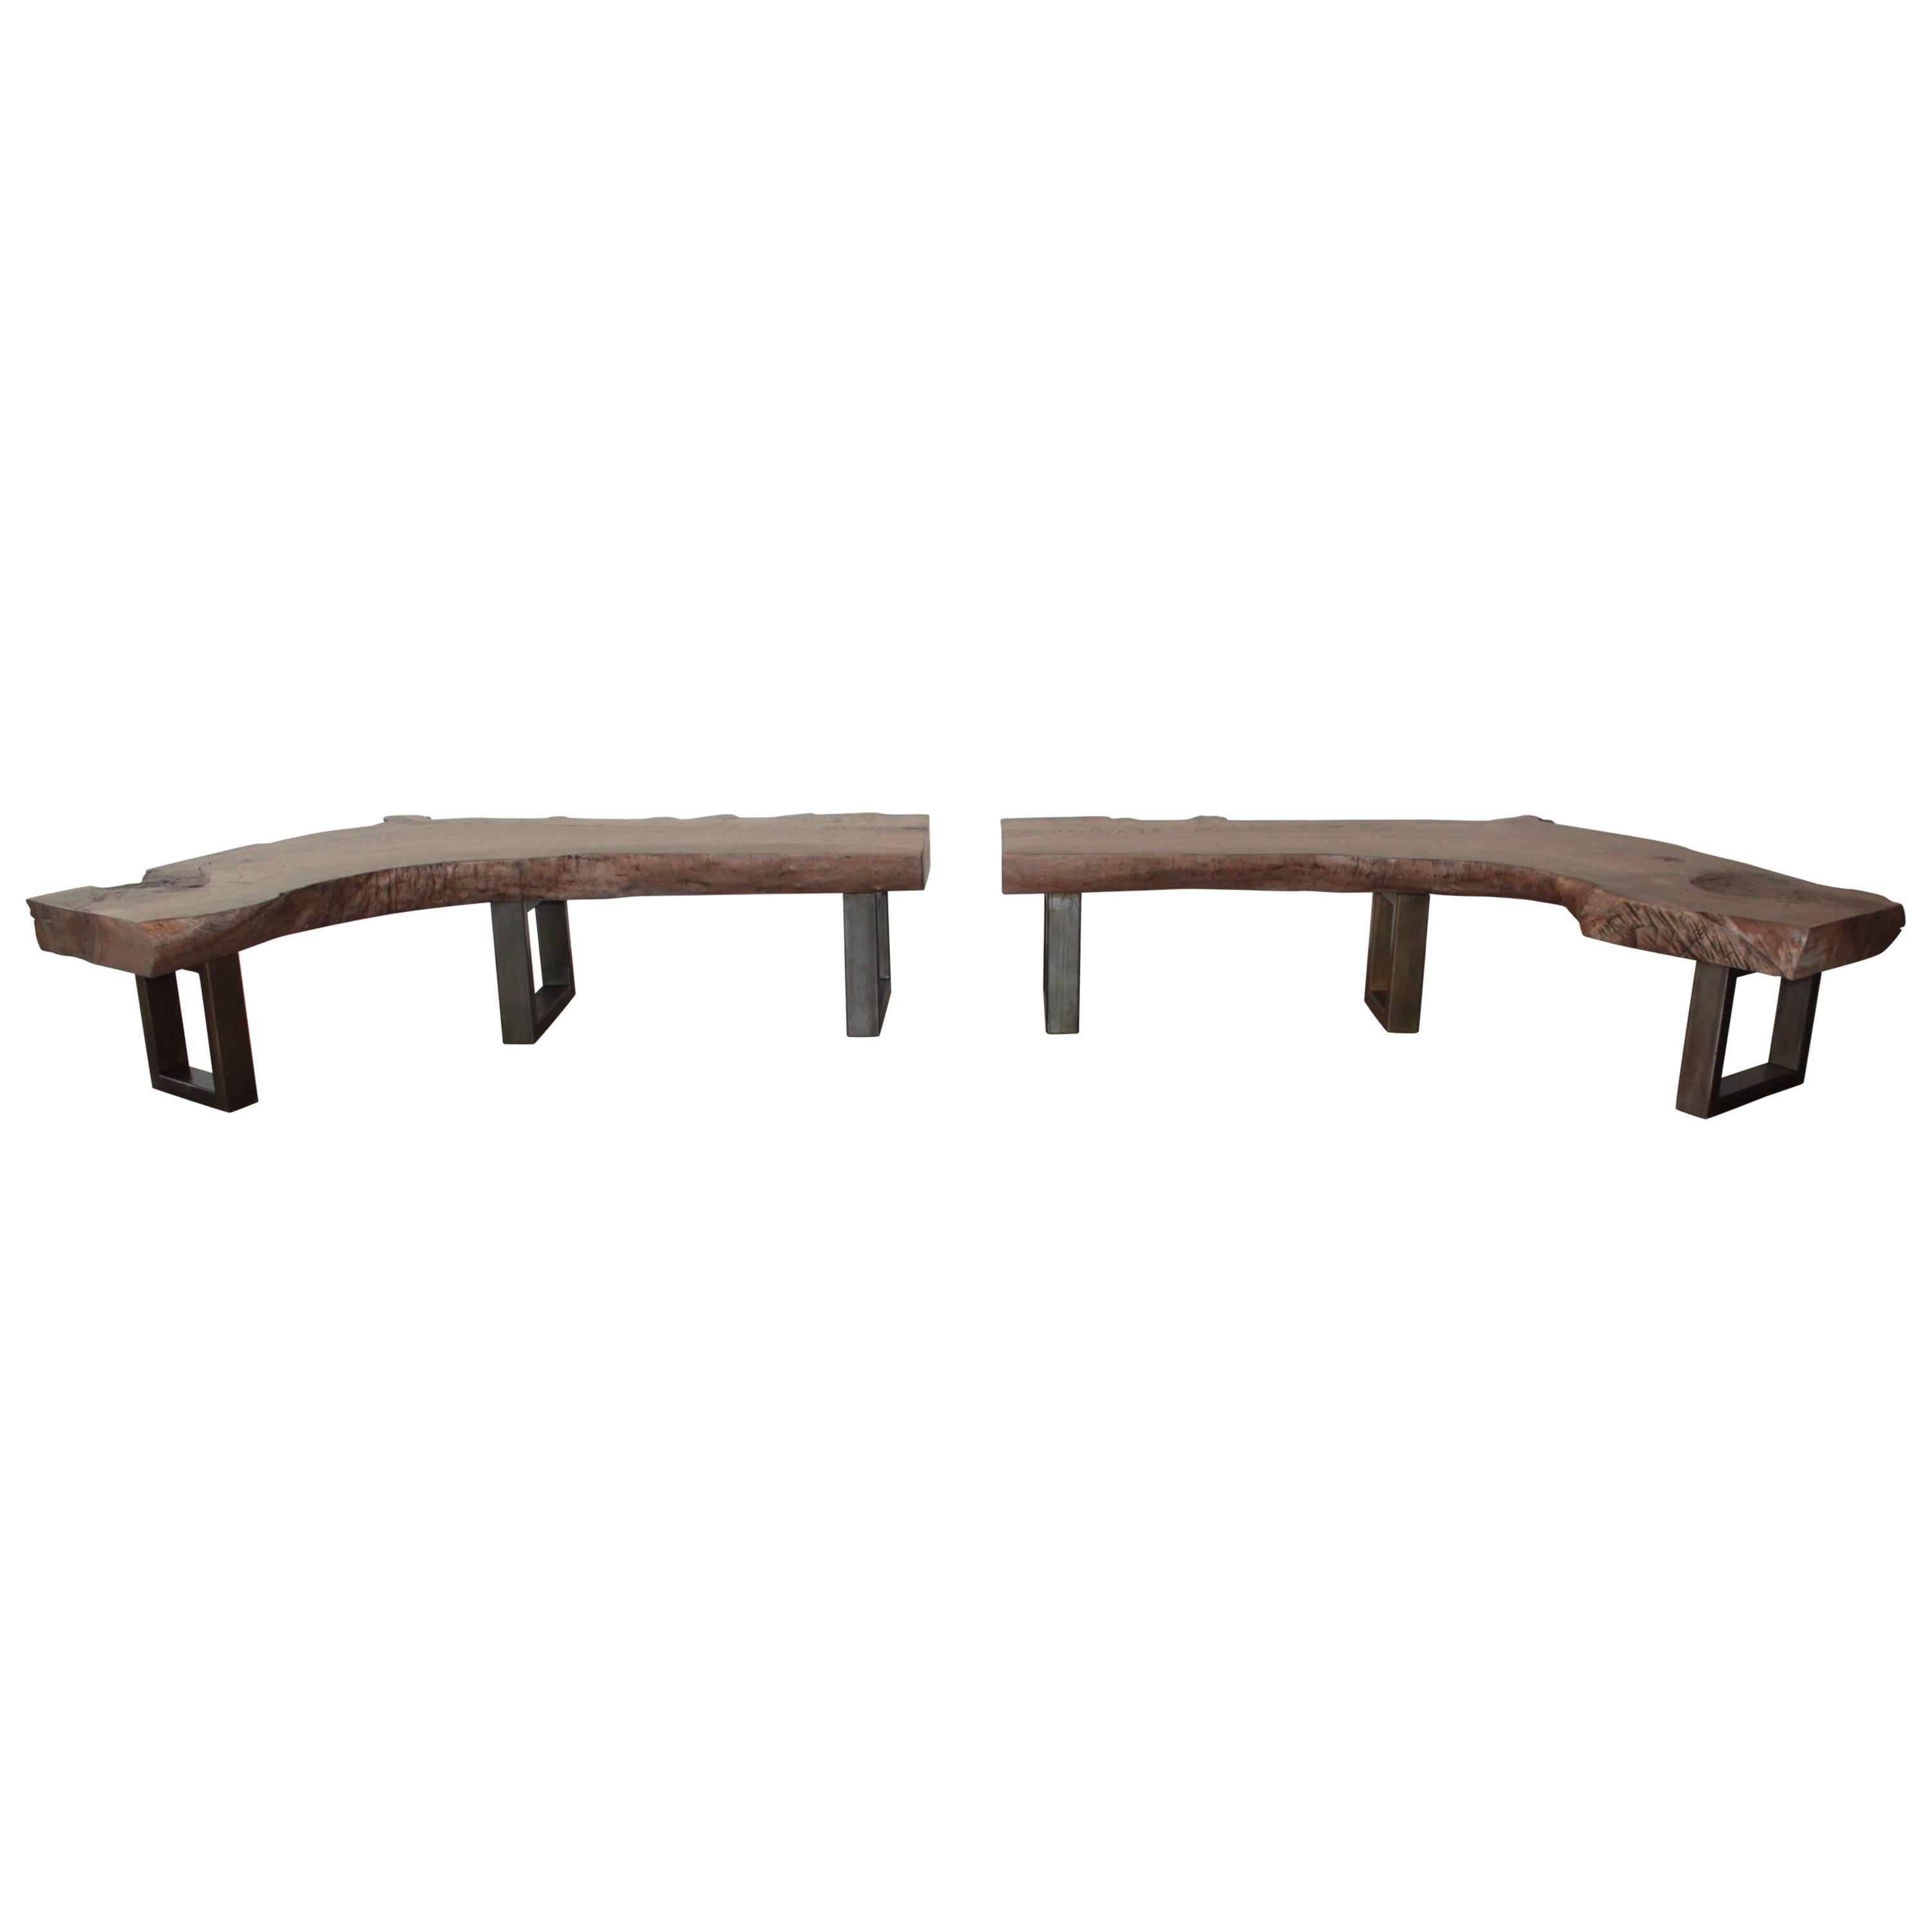 Futatsu Bench or Organic Modern Reclaimed Wood Bench For Sale